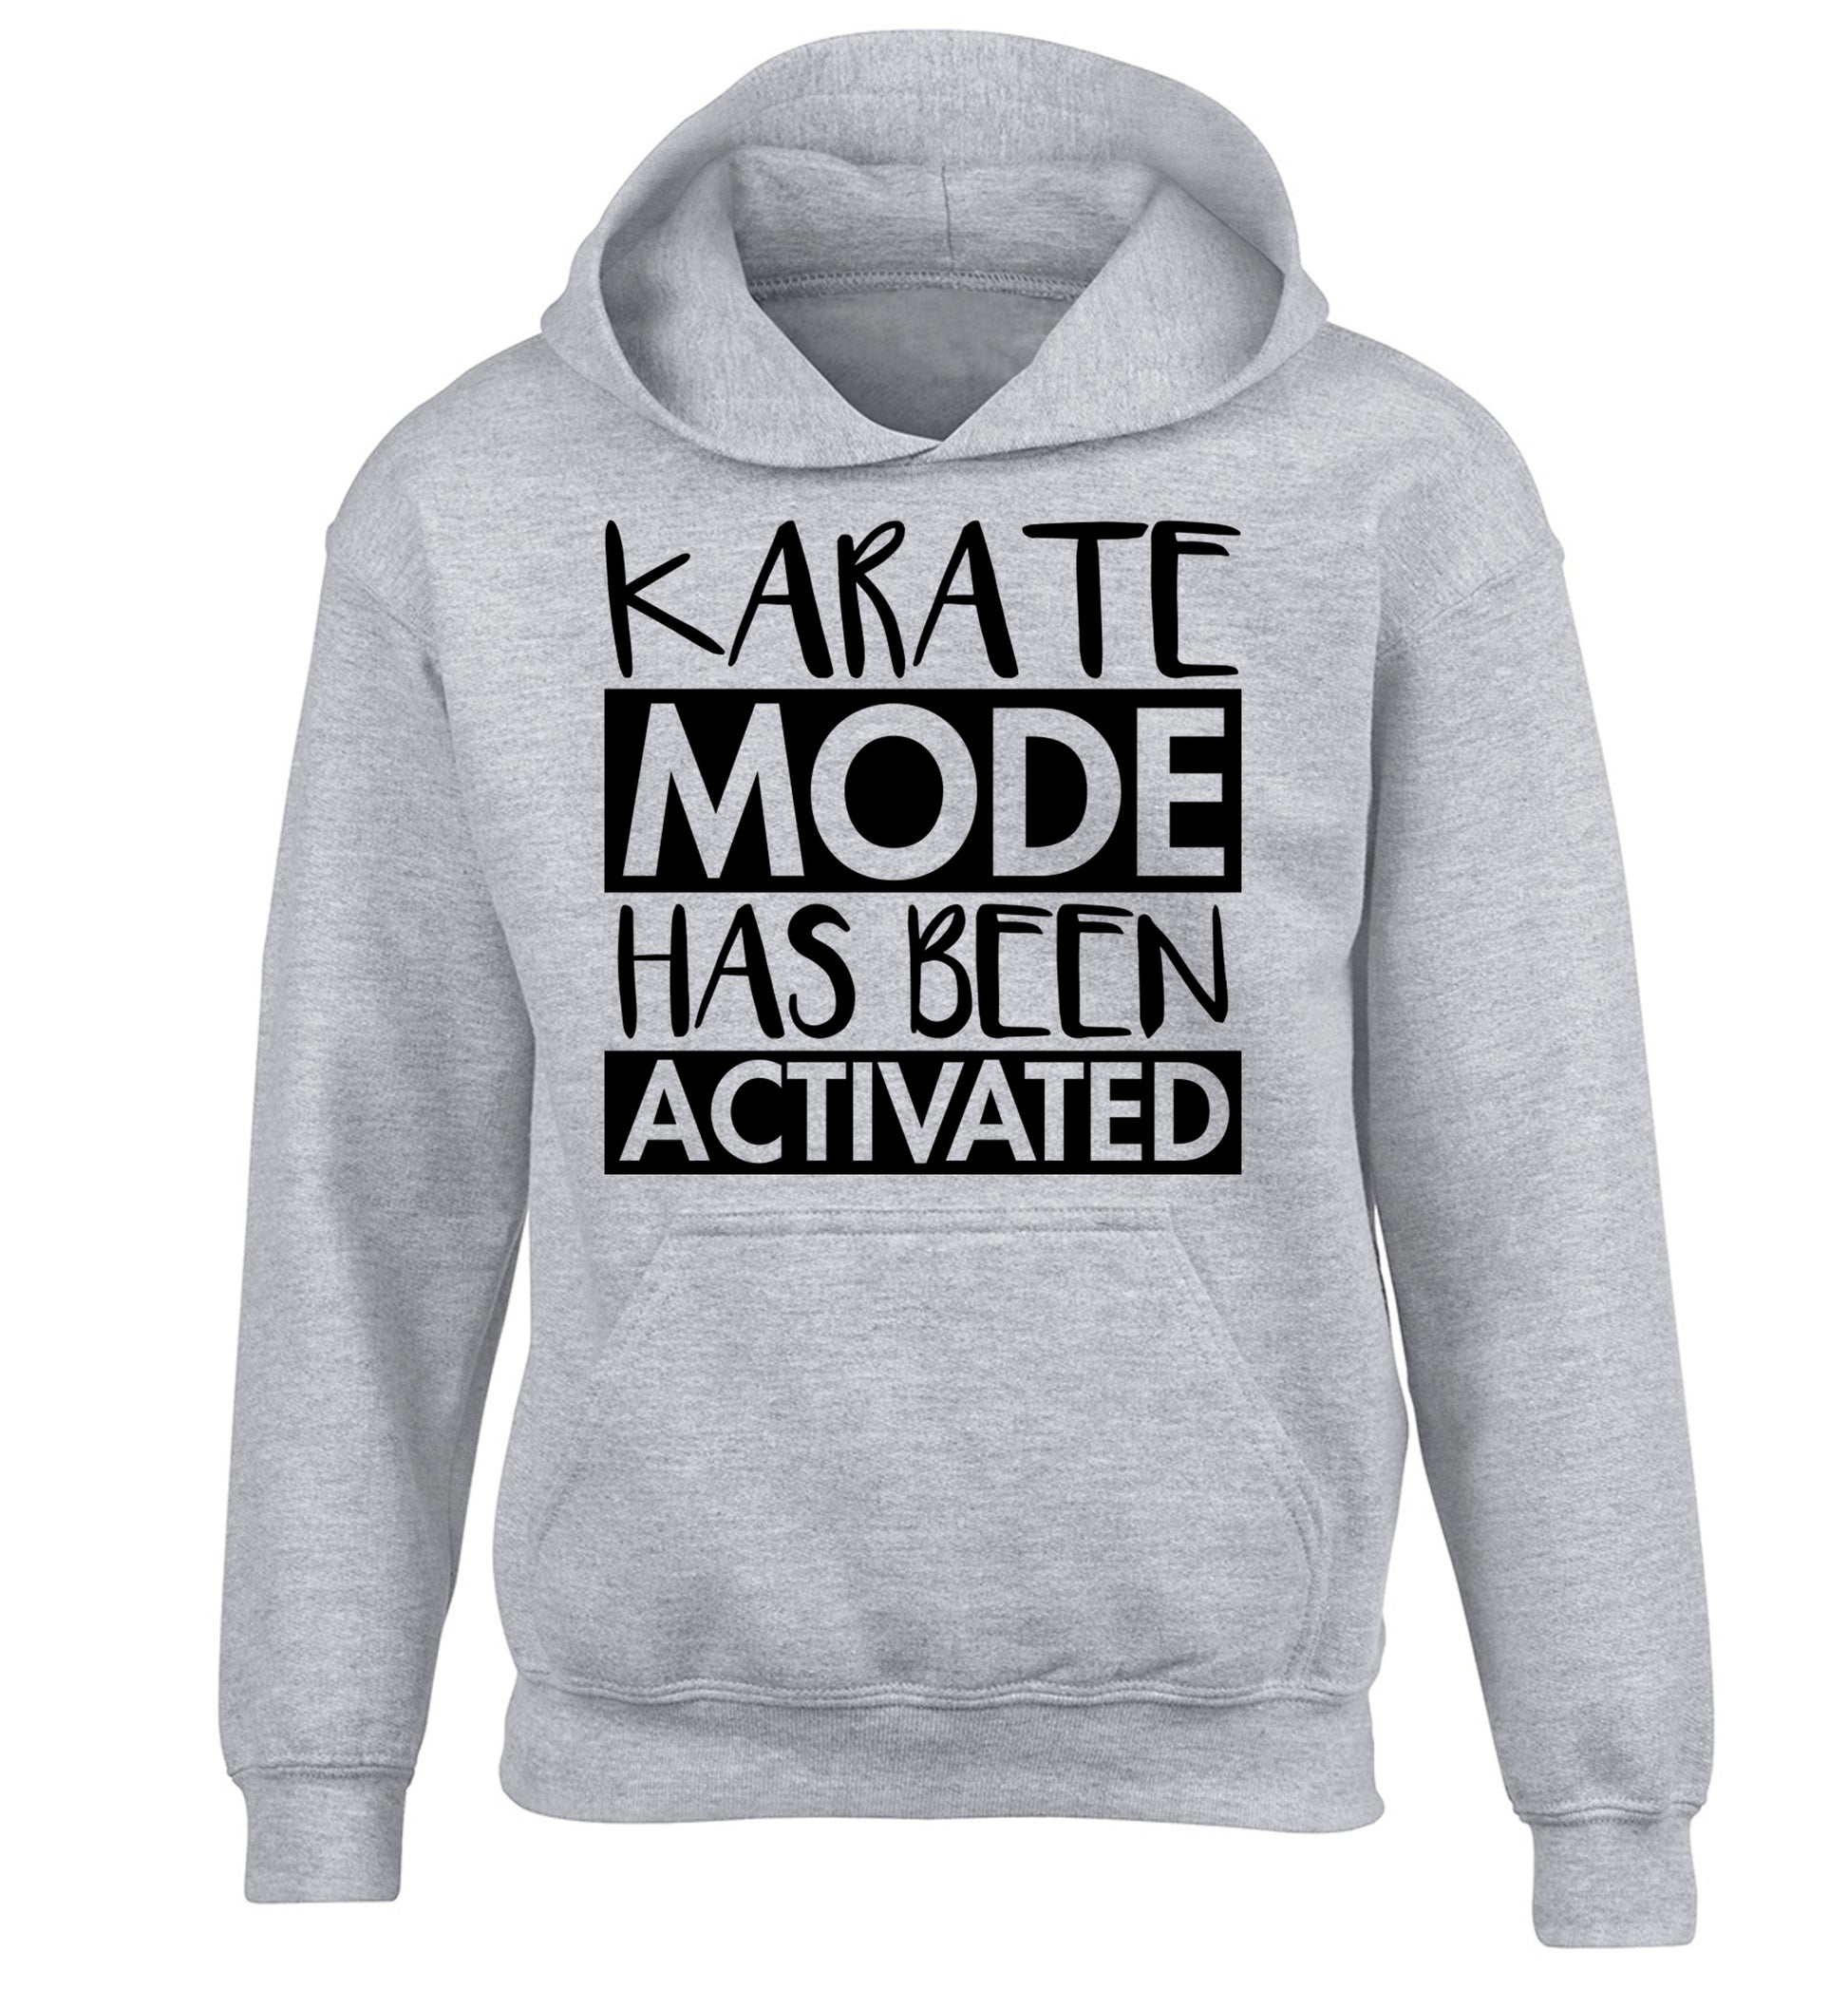 Karate mode activated children's grey hoodie 12-14 Years